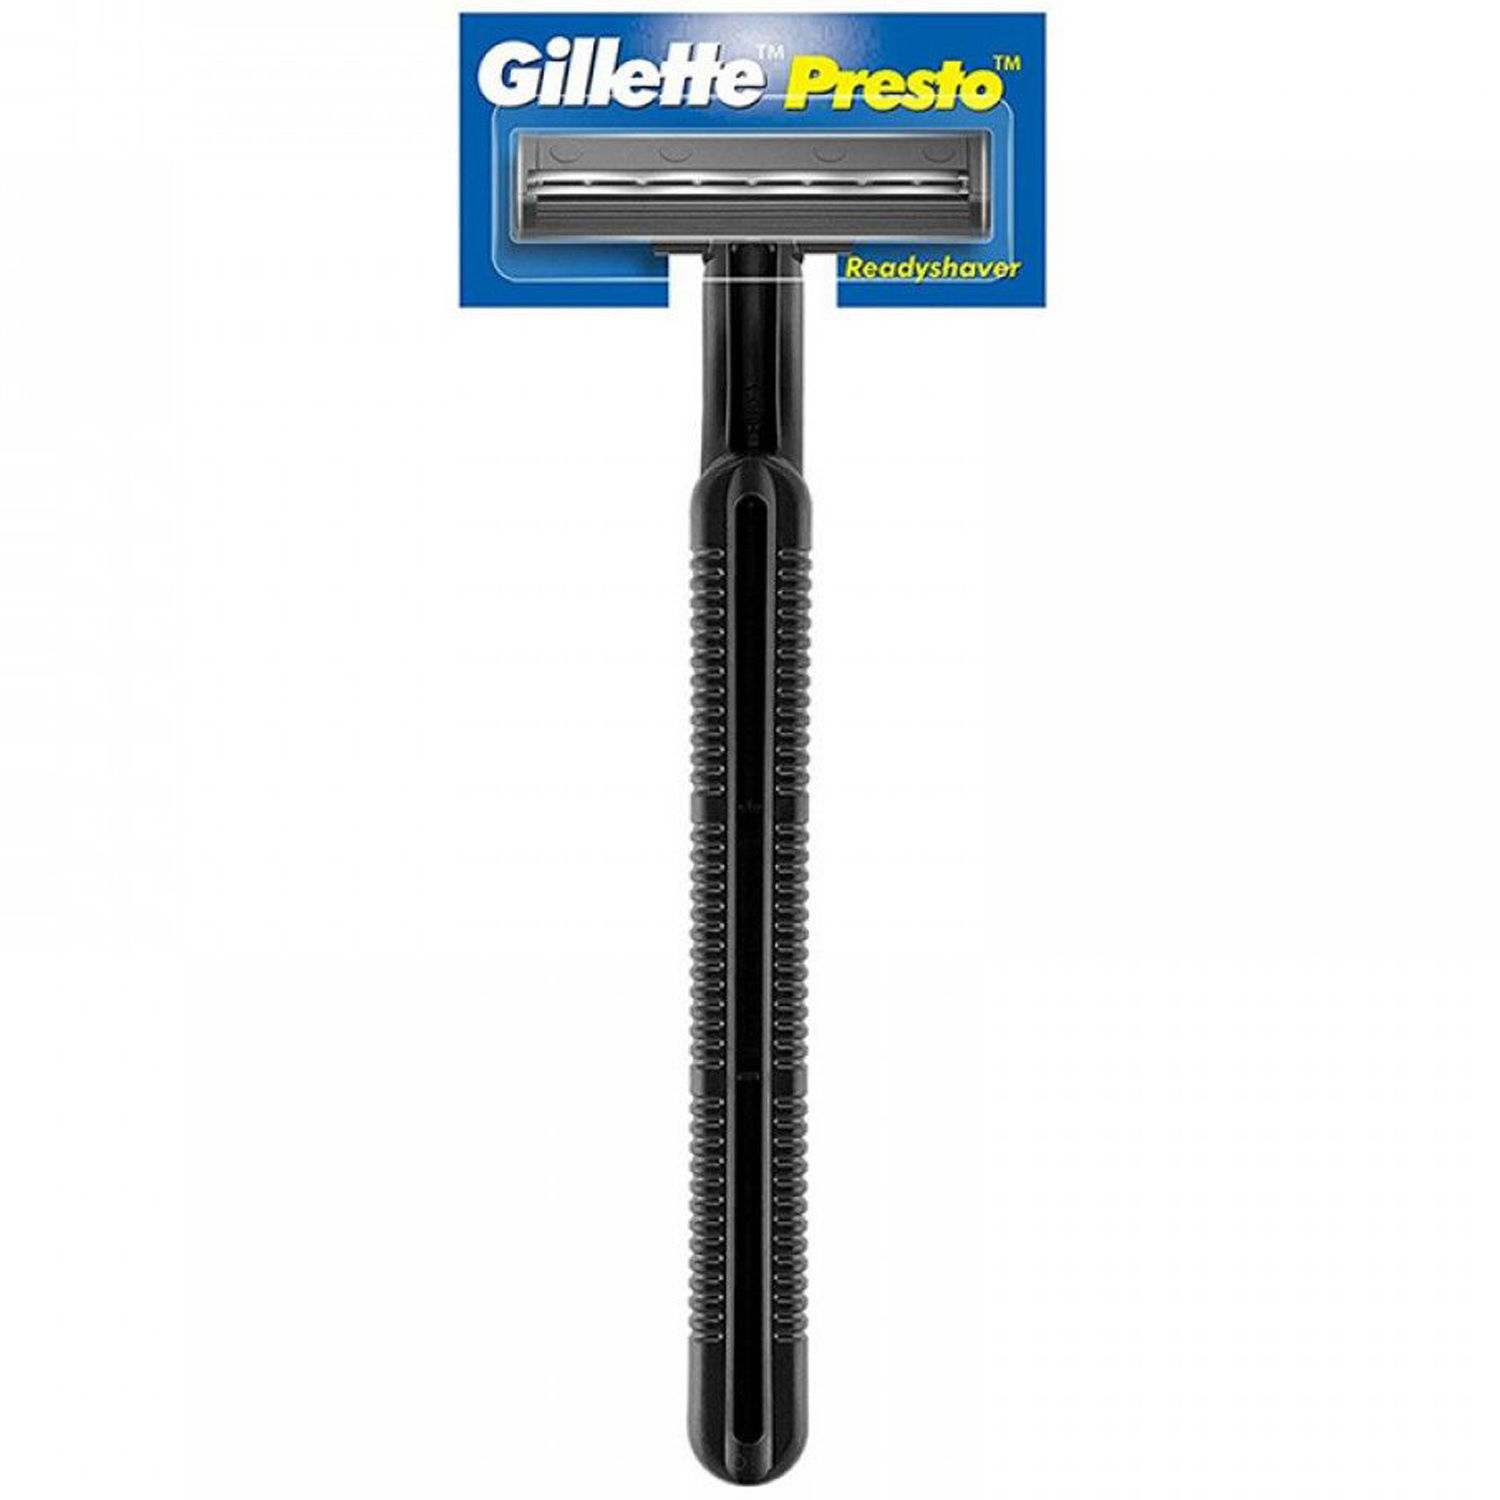 Buy Gillette Presto Razor, 1 Count Online